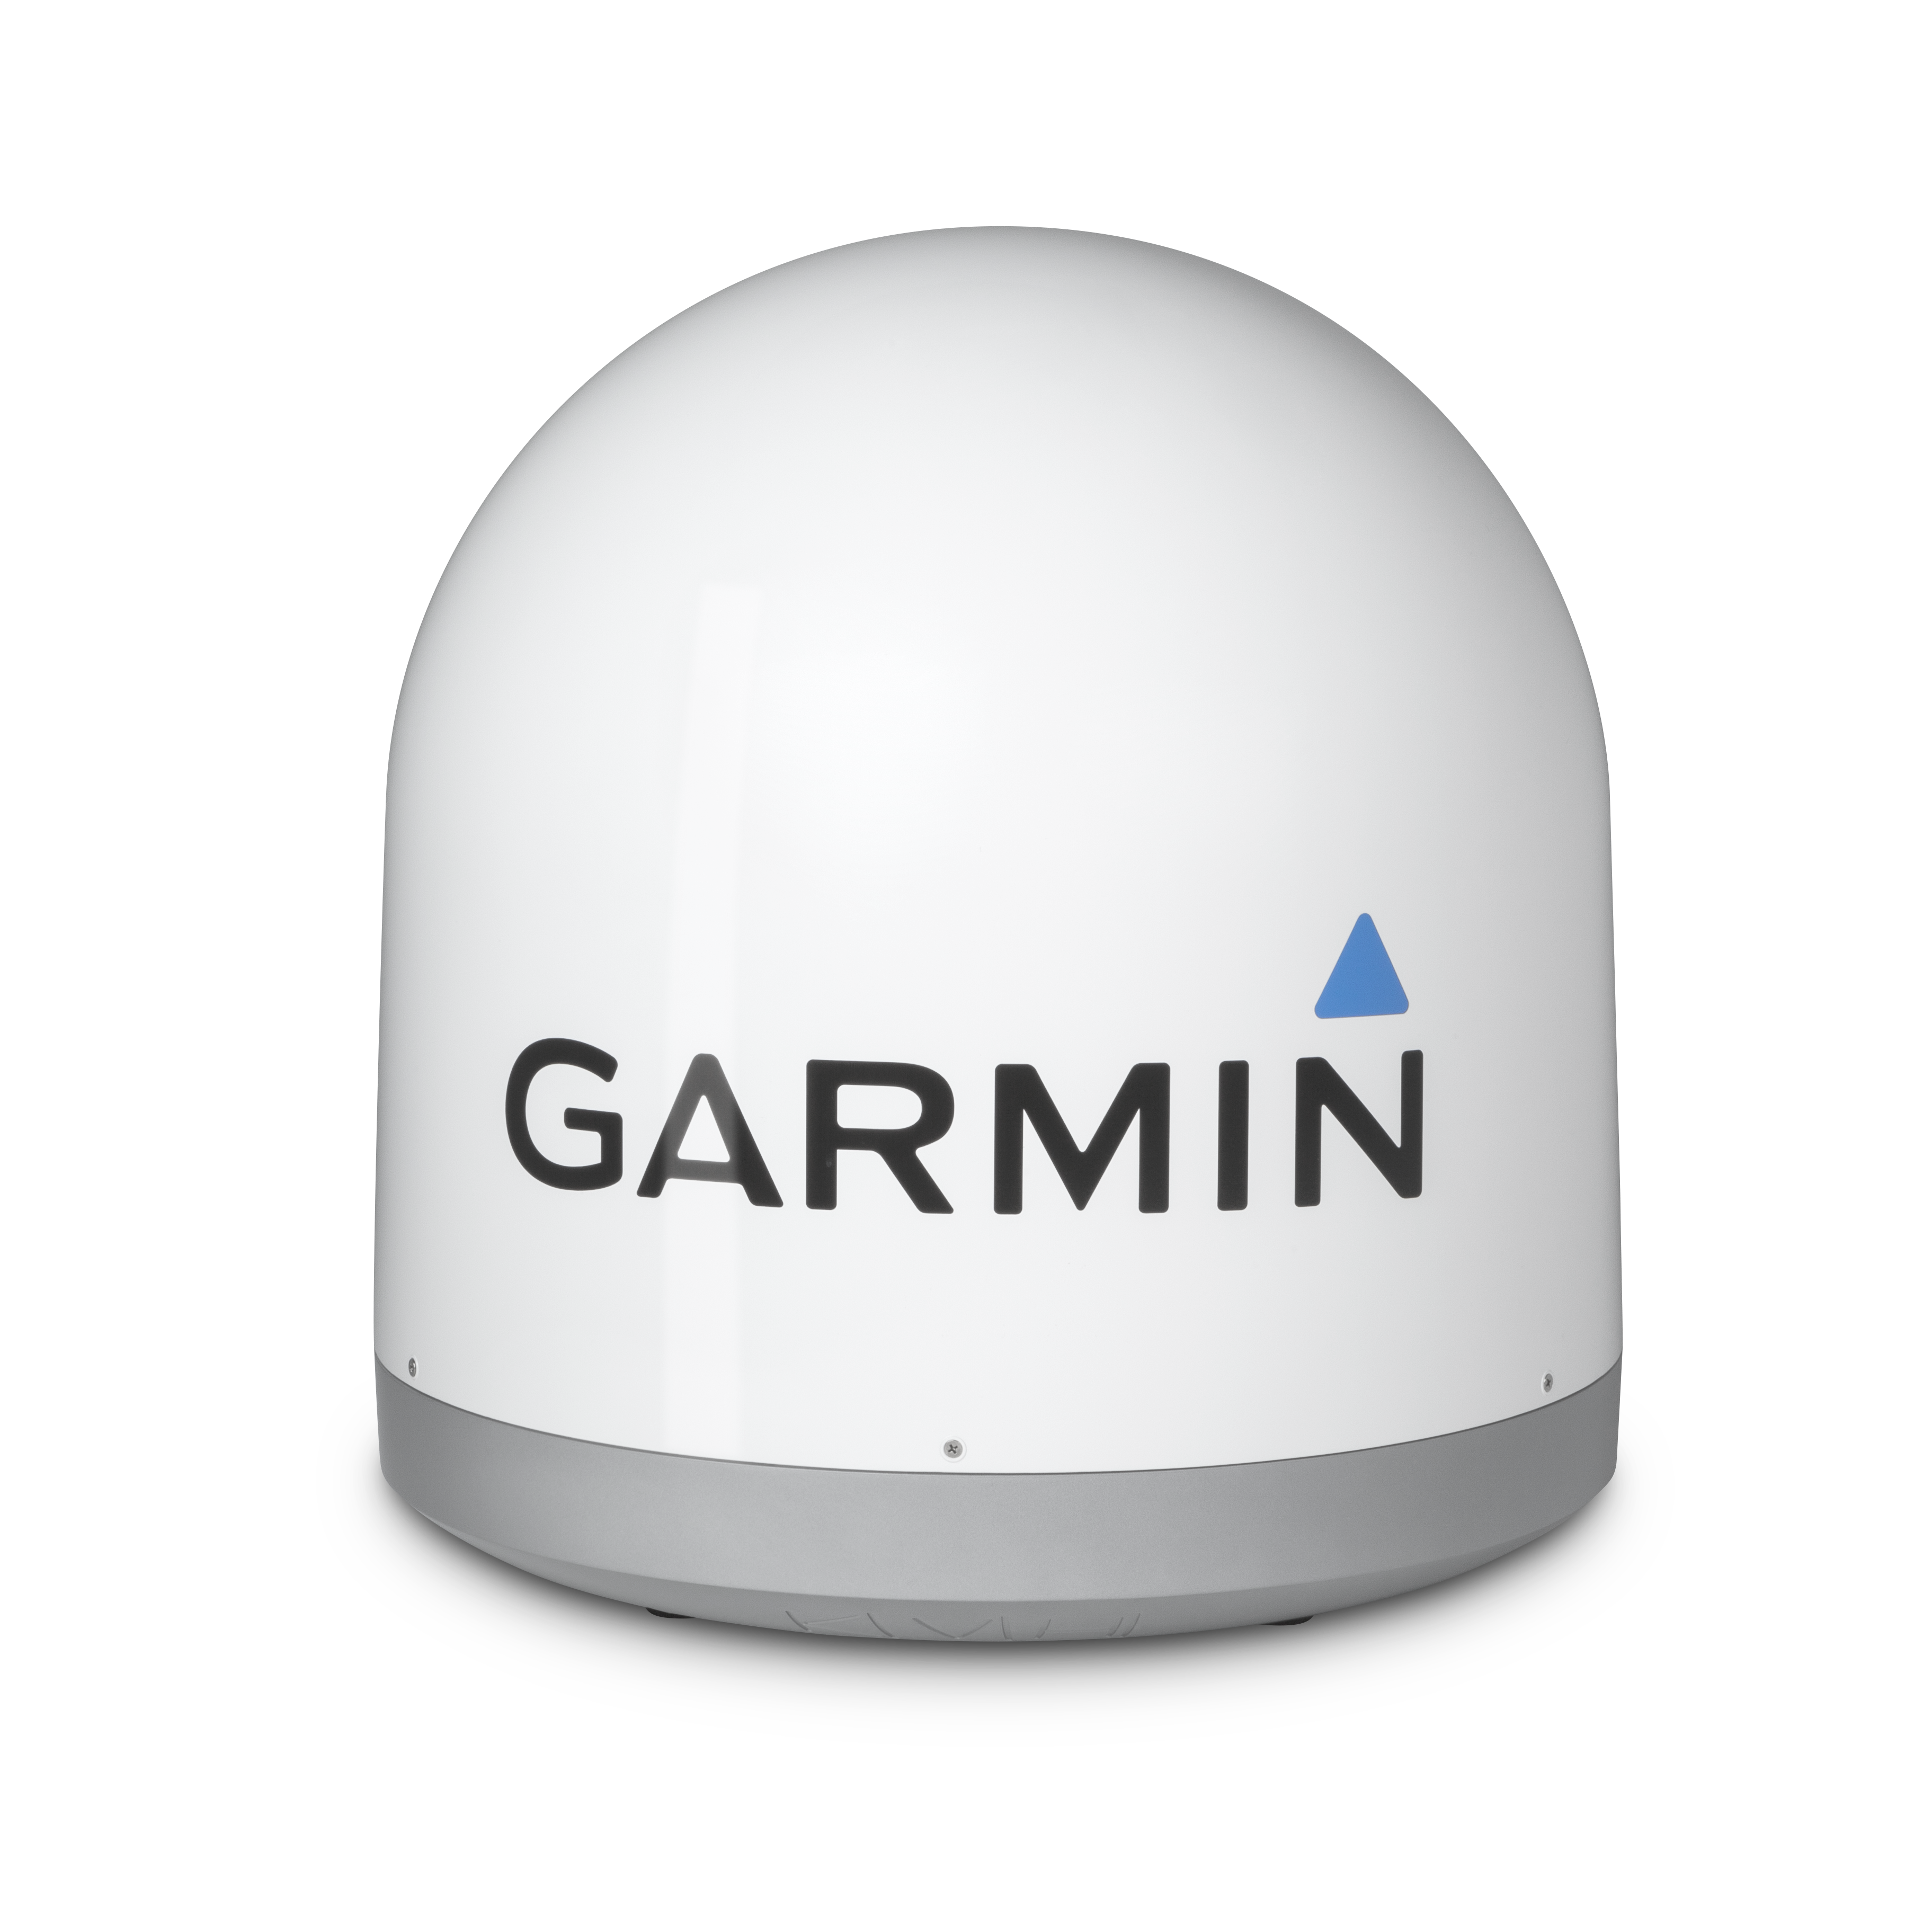 Garmin GTV6 satellit-TV-dome